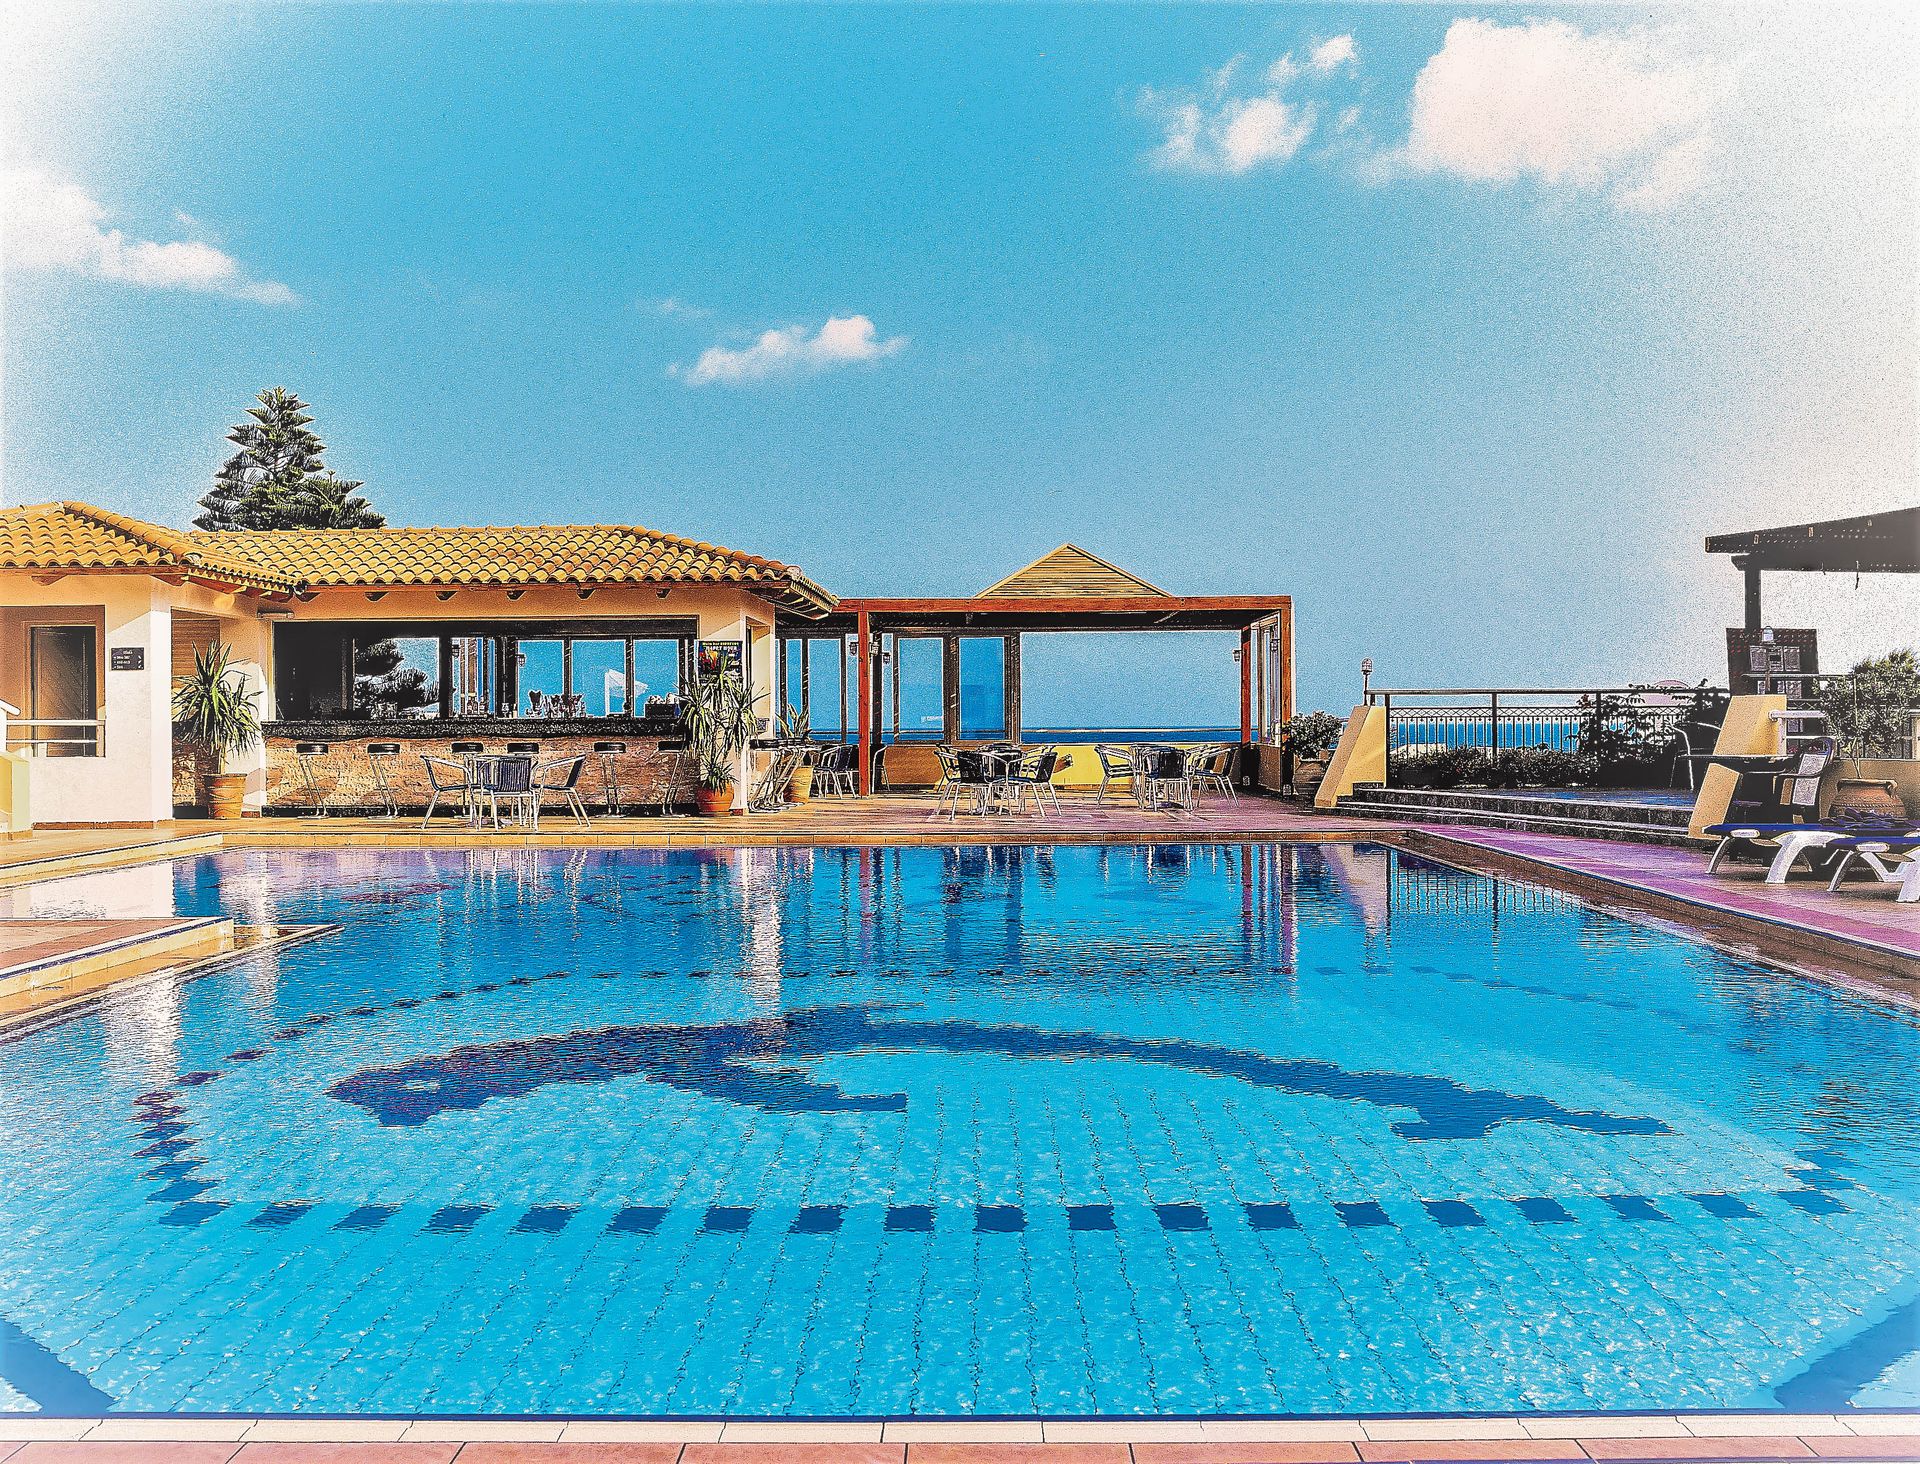 4* Castello Village Resort - Λασίθι, Κρήτη ✦ 2 Ημέρες